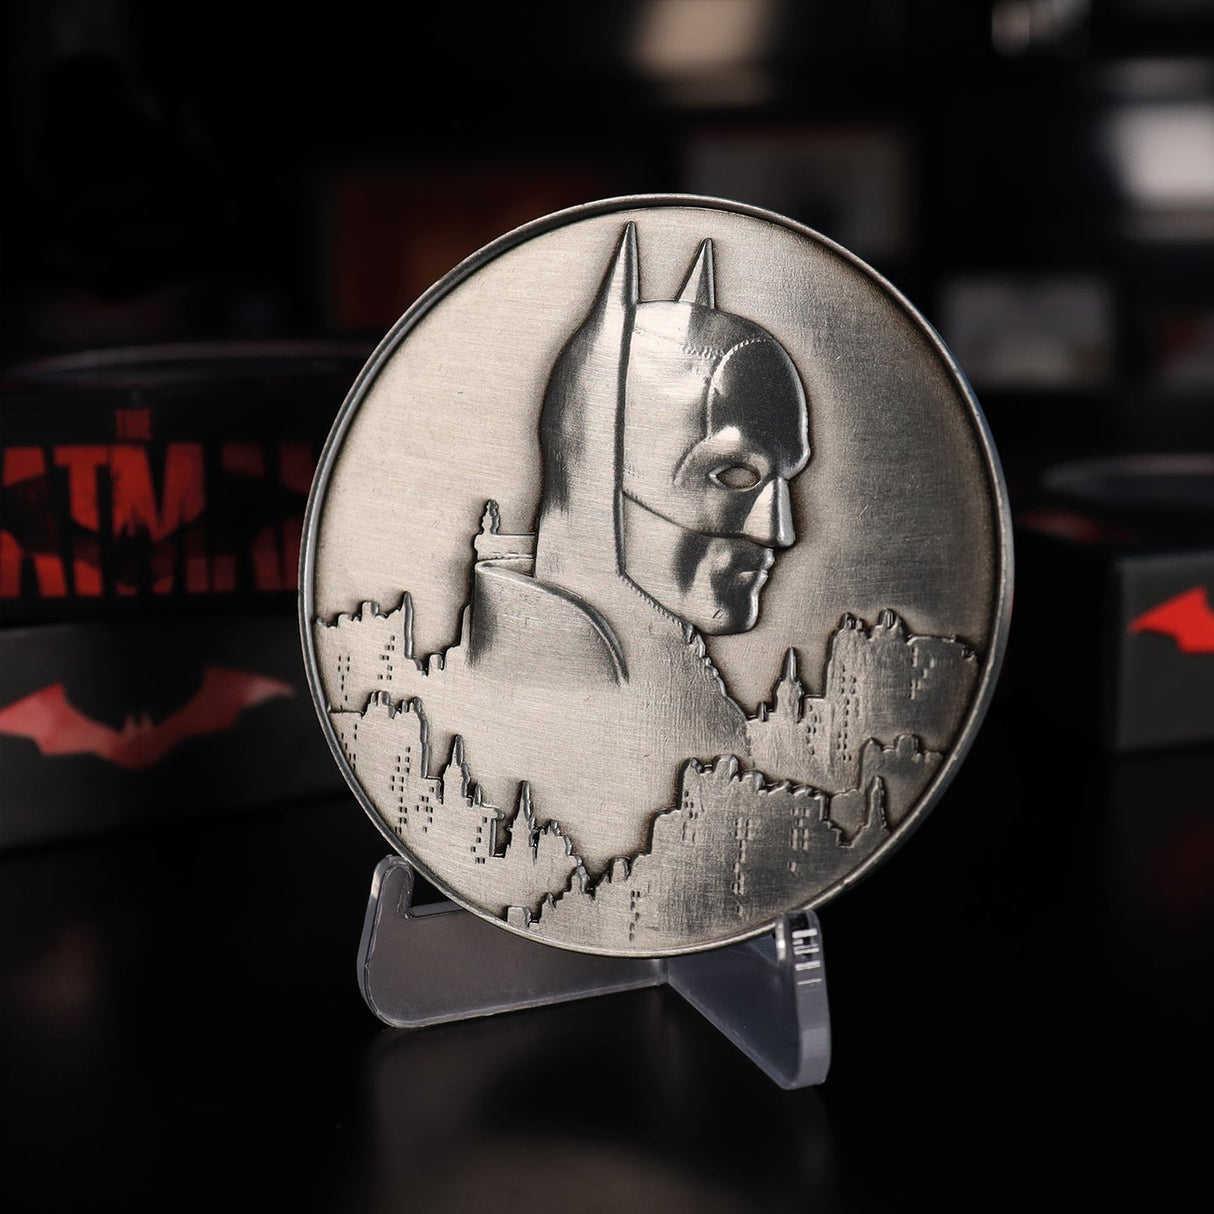 DC Batman | Medallion | Limited Edition